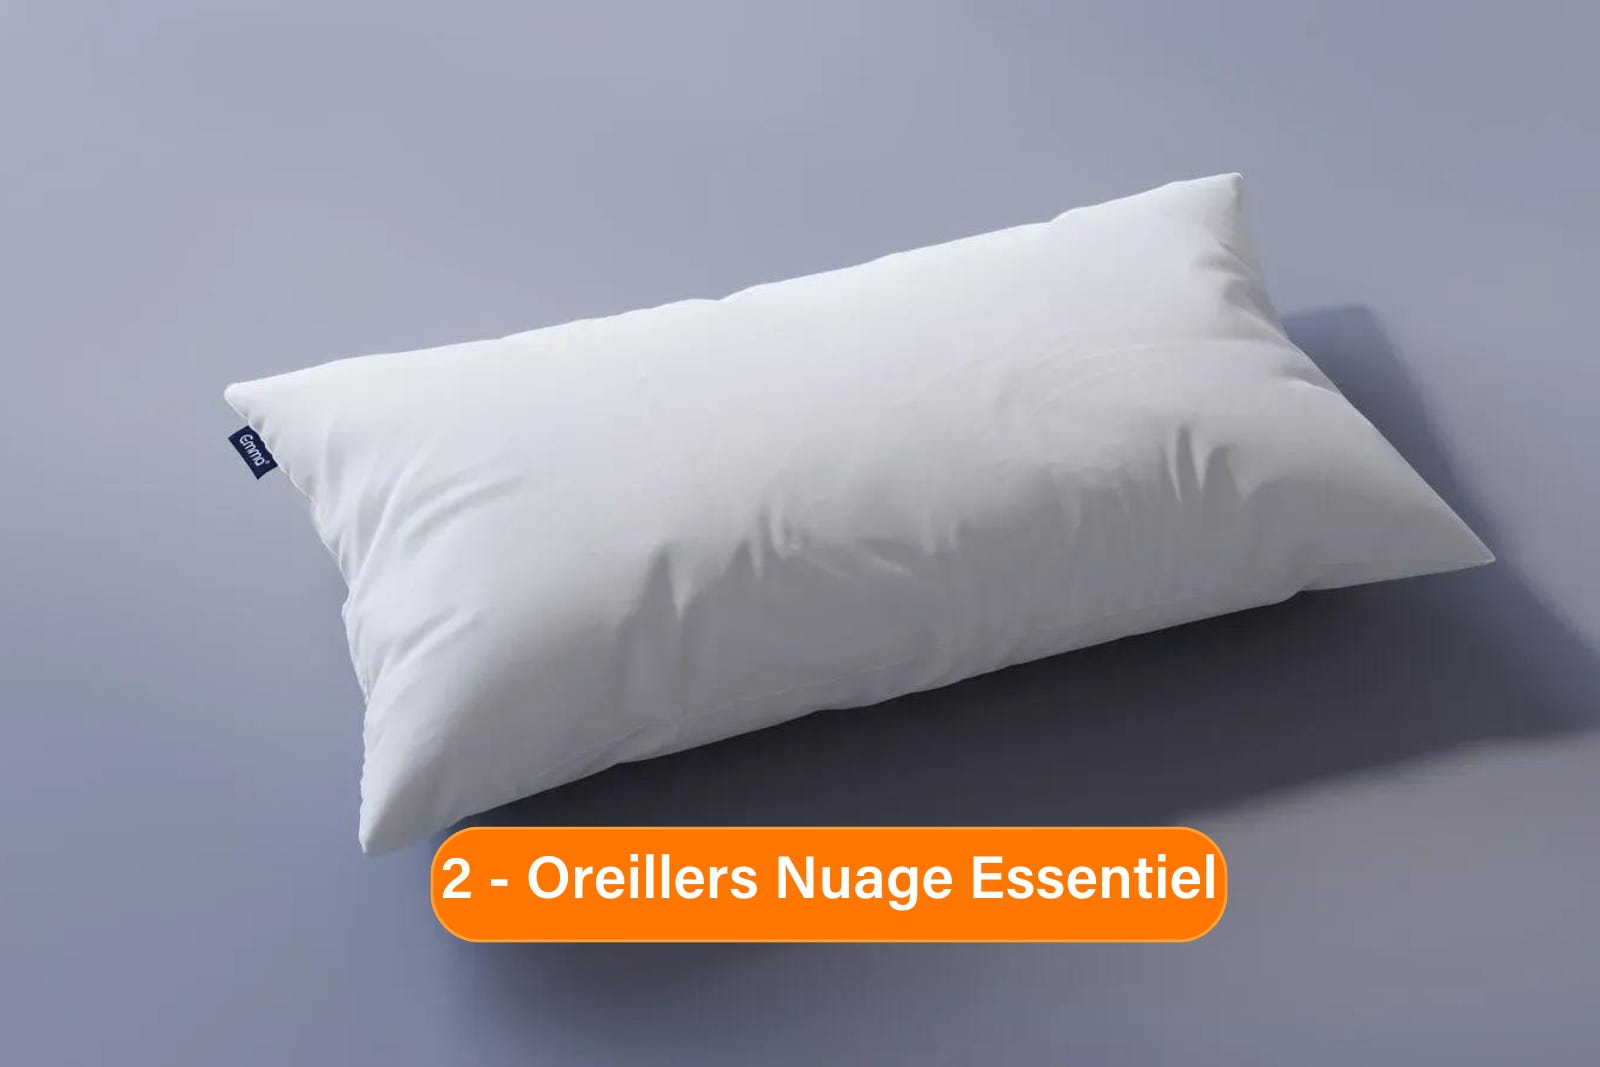 Oreillers_Nuage_Essentiel_-_Sofa_bed_bundle.png